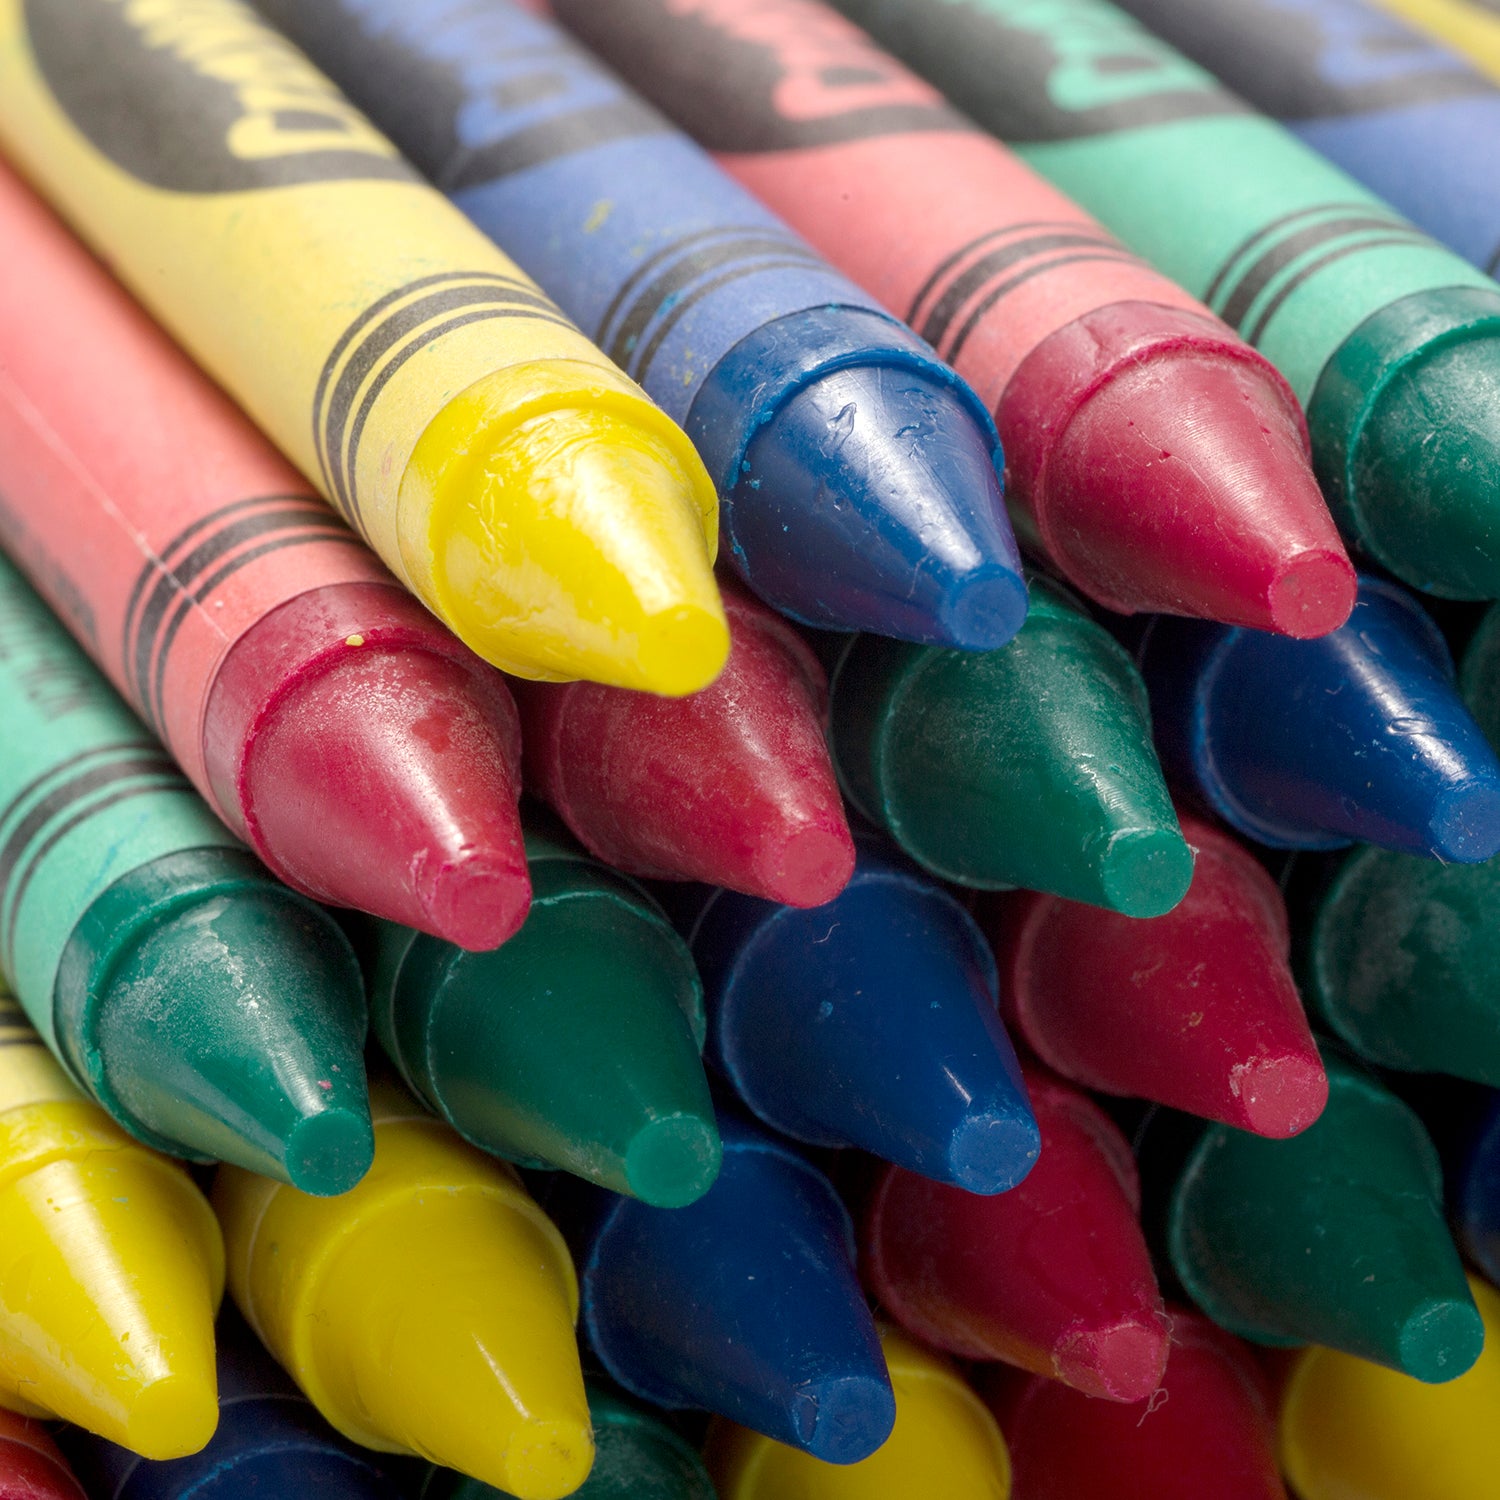 Crayola Crayon Bulk Case - 4 colors (750 Packs of 4 each = 3,000